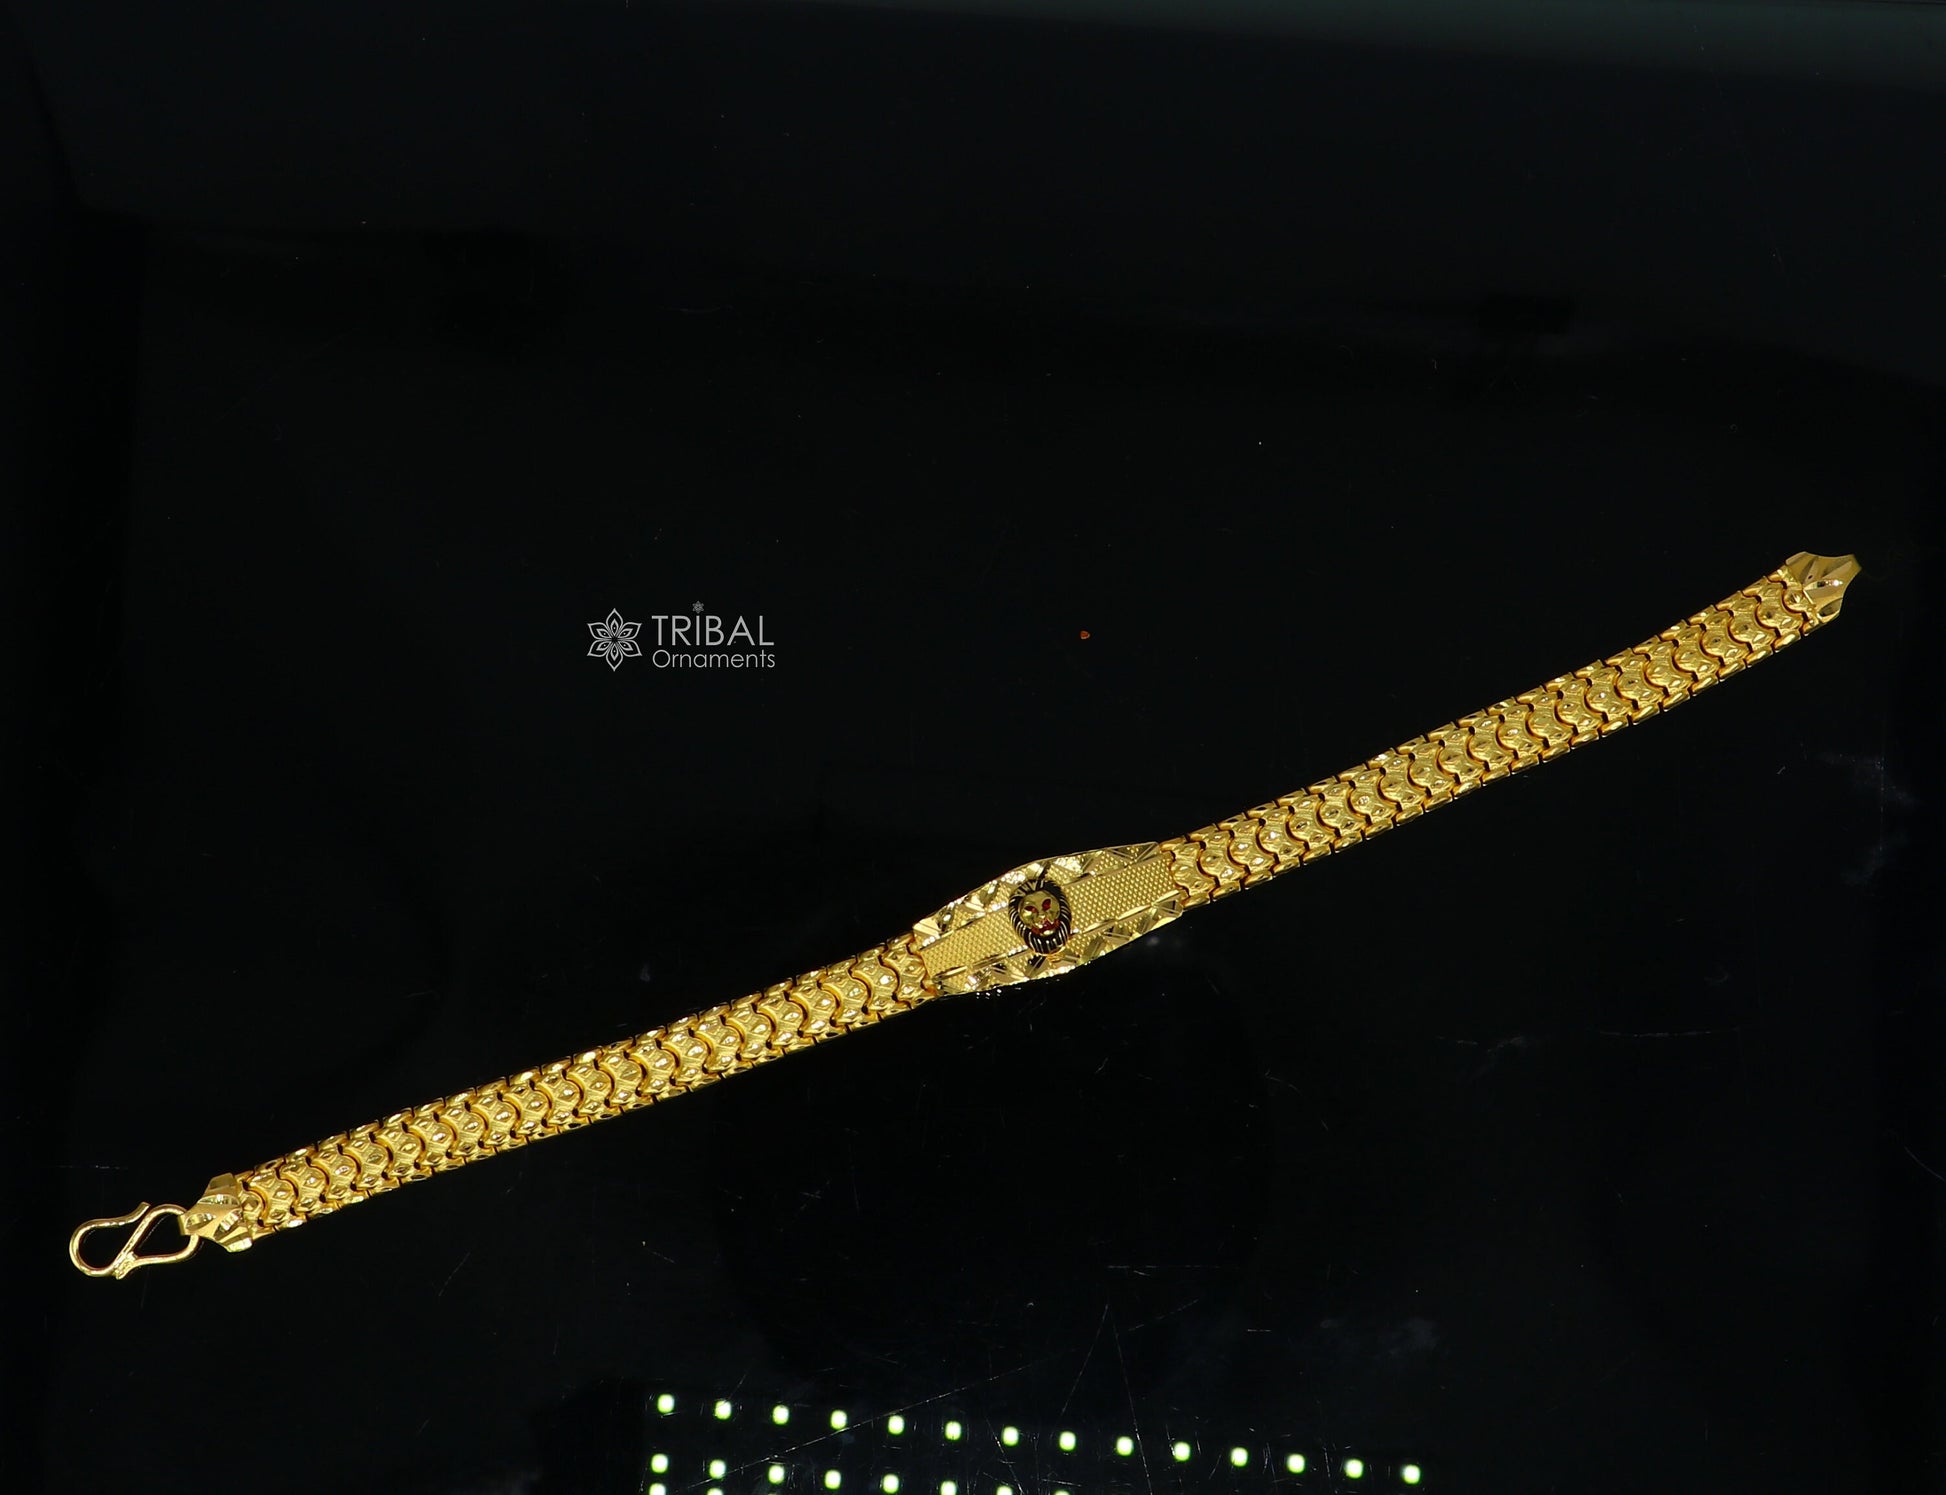 Indian Traditional cultural lion face Design bracelet hallmarked 22kt yellow gold men's bracelet lion head unique wrist bracelet gbr44 8